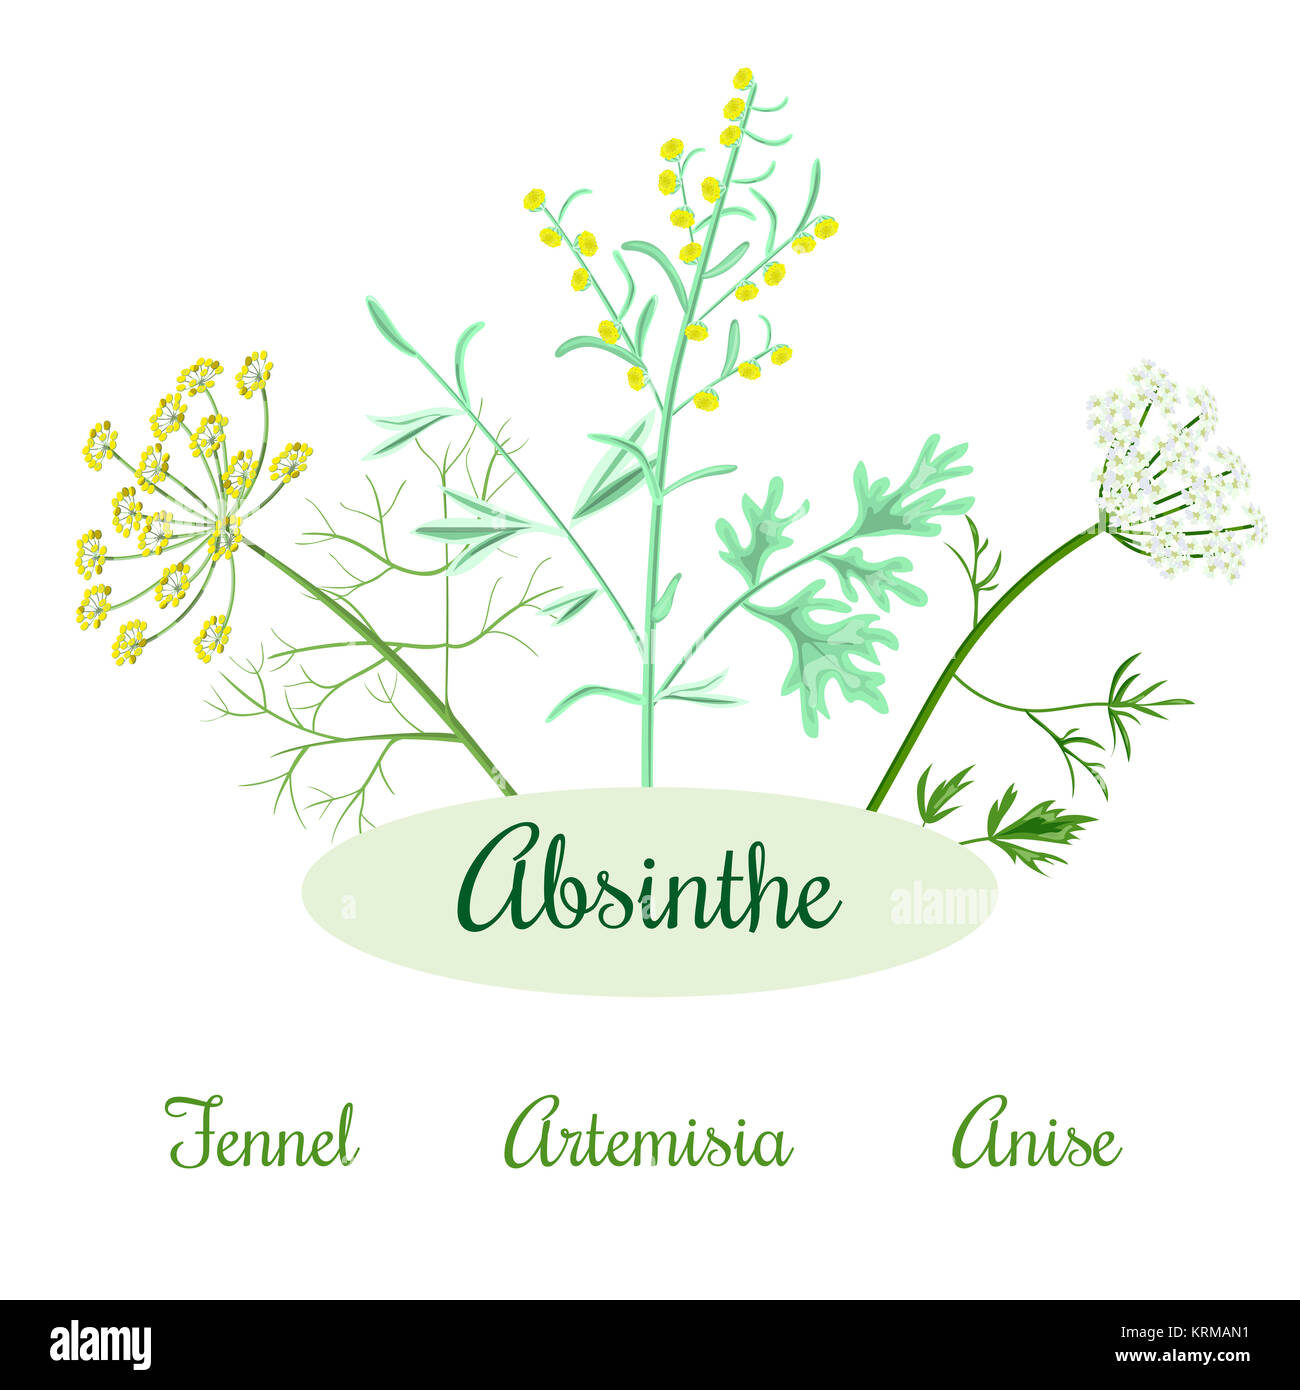 absinthe herbs ingredients Stock Photo